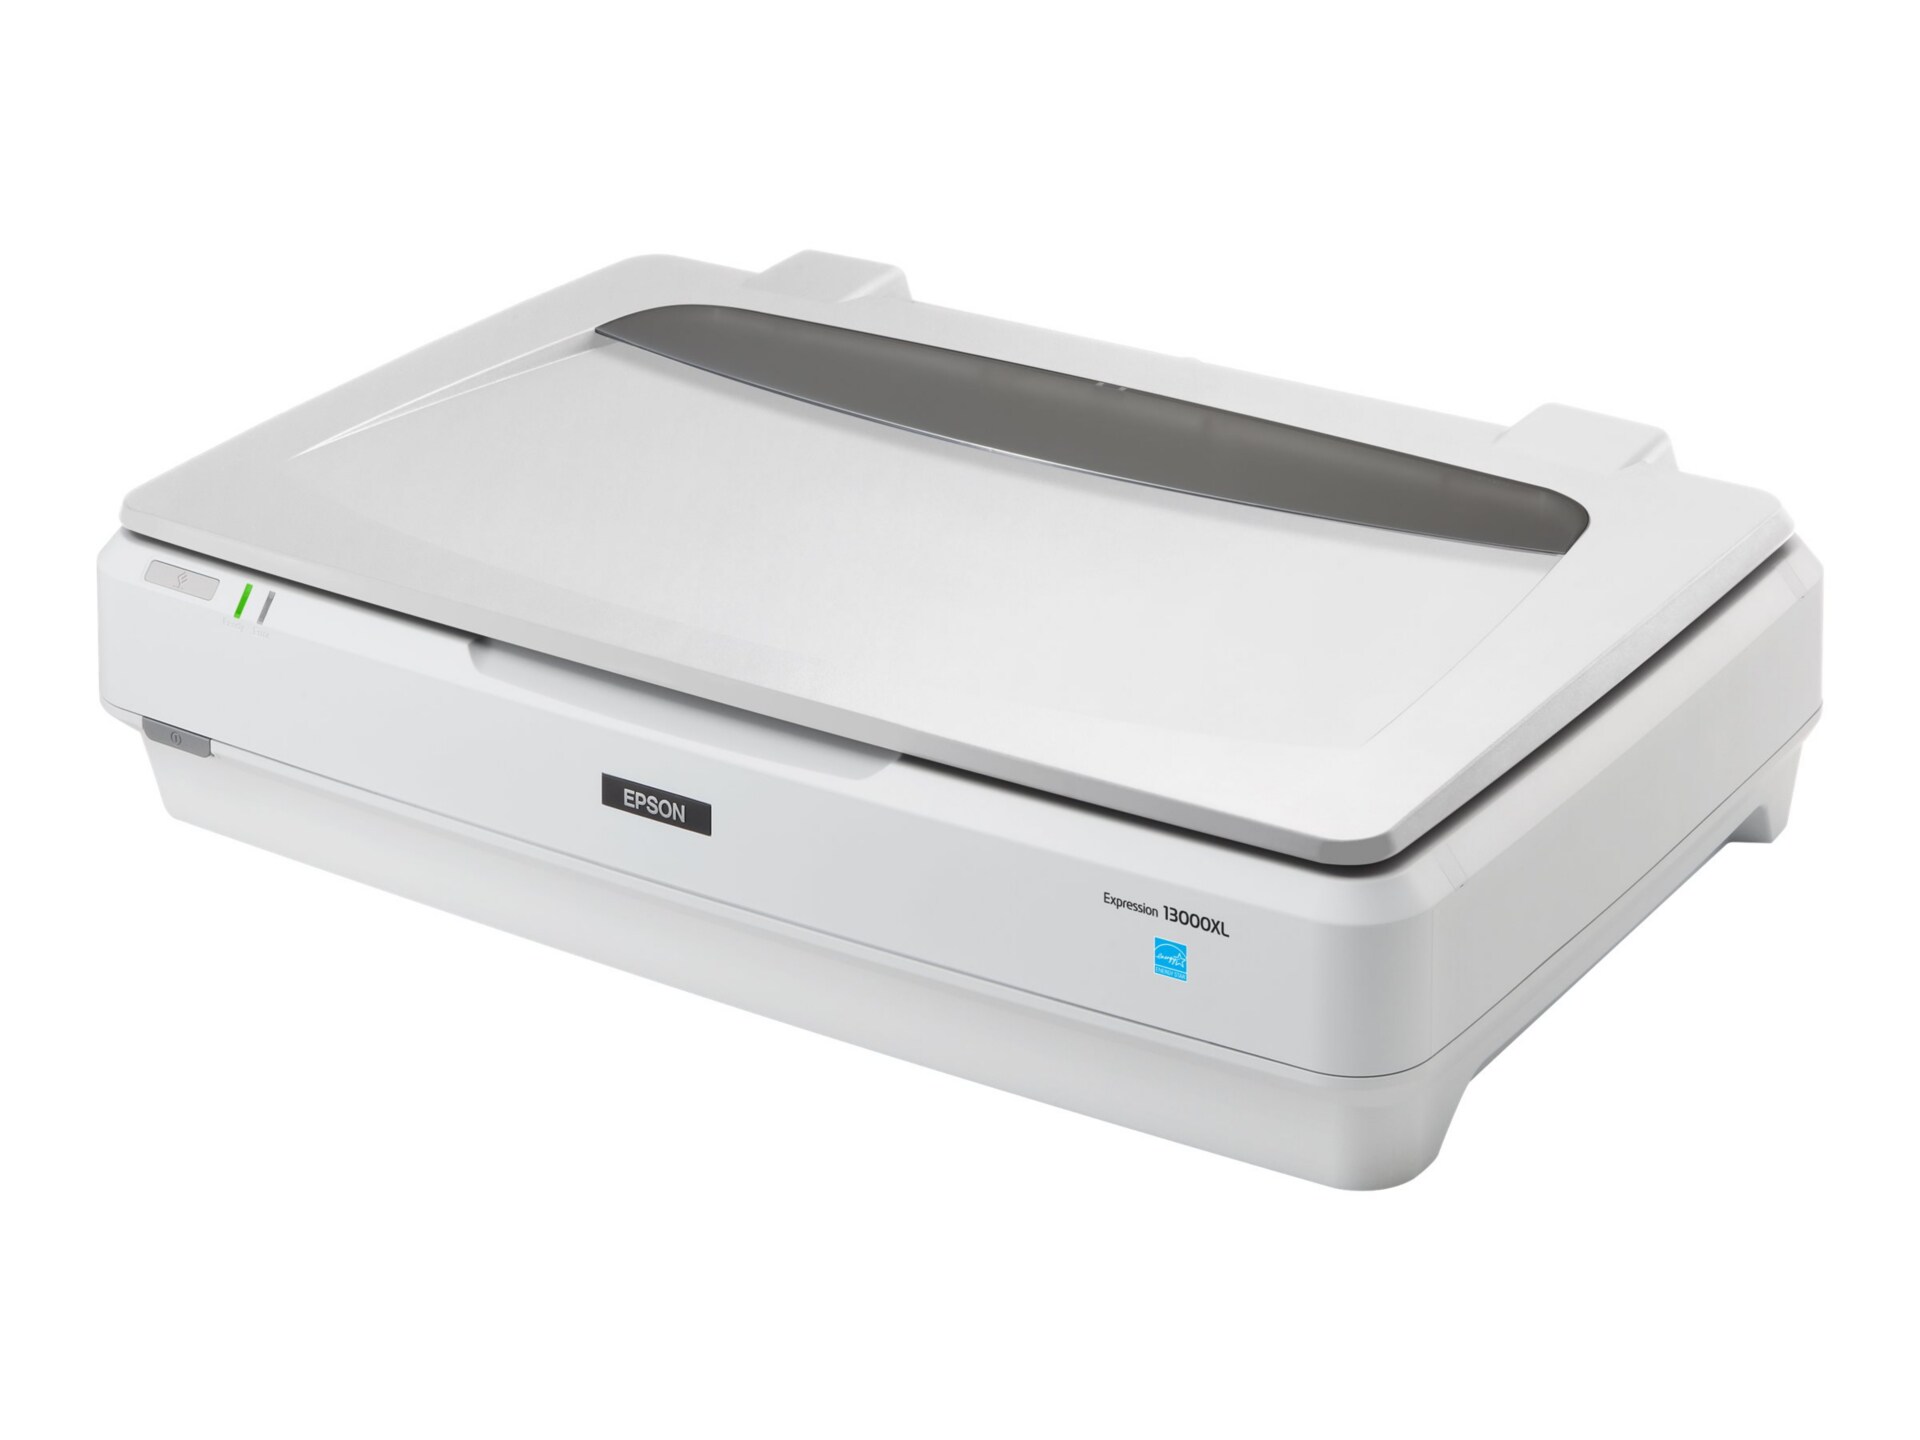 Epson Expression 13000XL - flatbed scanner - desktop - USB 2.0 - B11B257201  - Document Scanners - CDW.ca